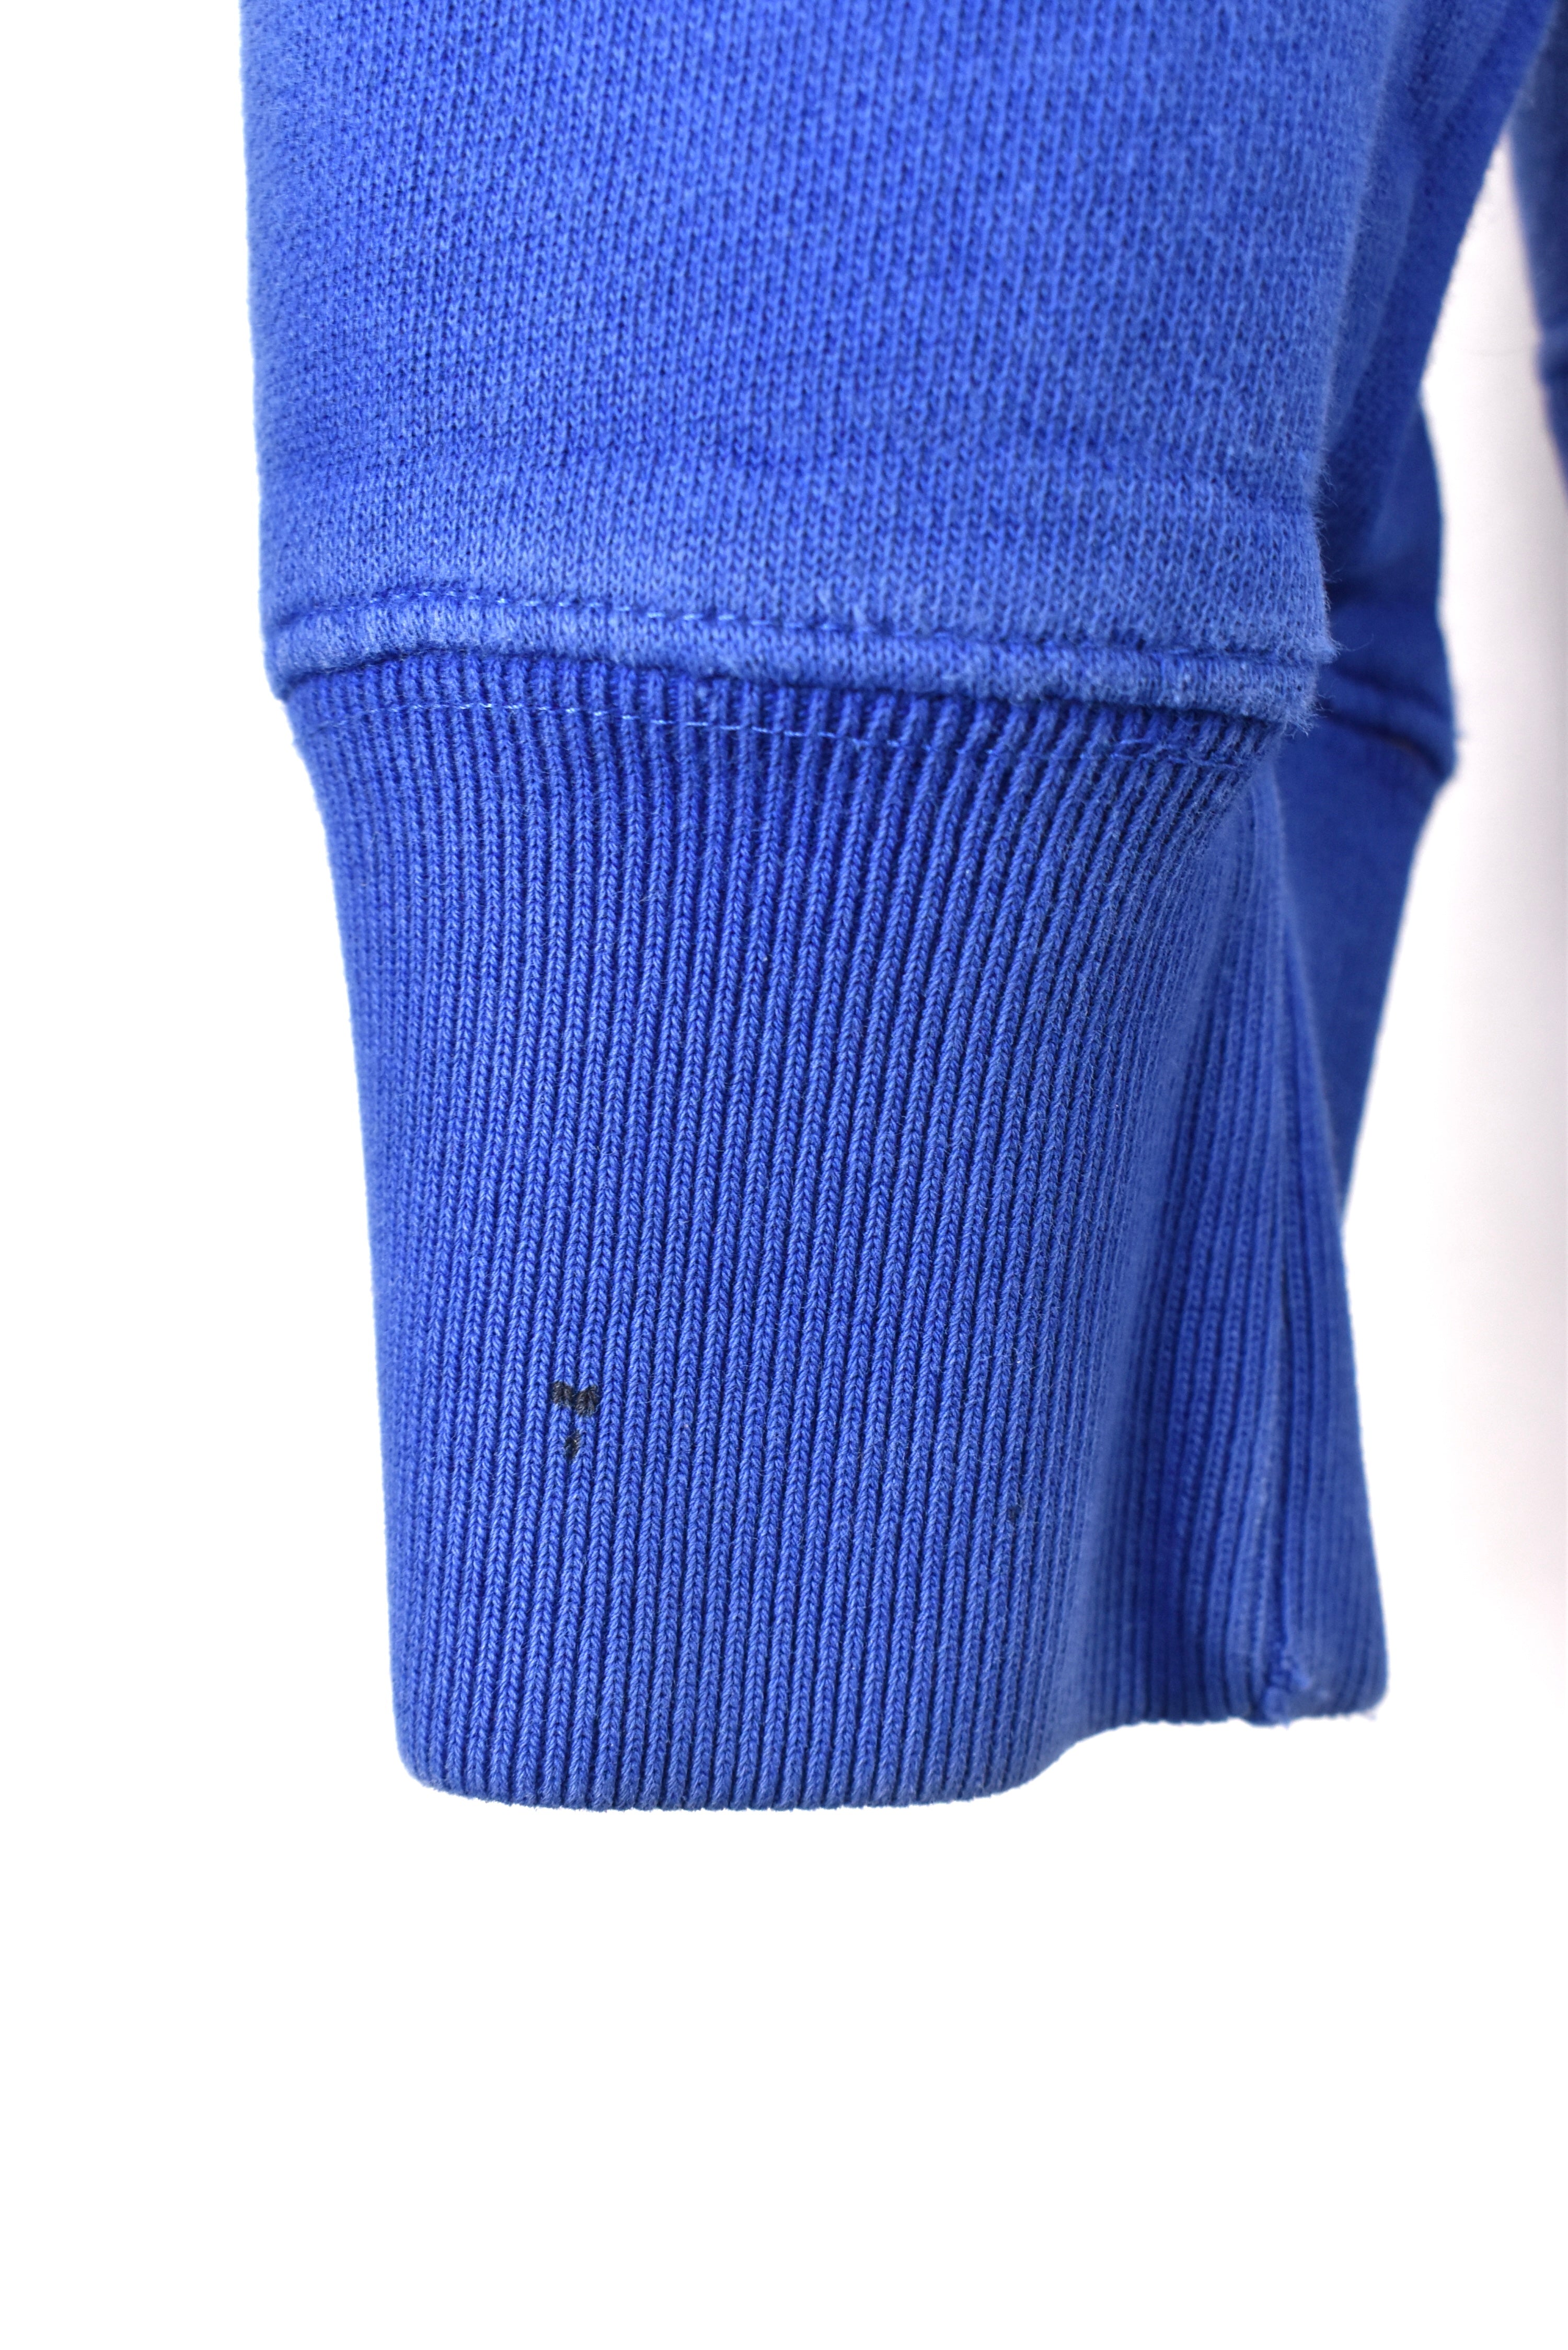 Vintage Ralph Lauren sweatshirt, Polo Sport blue embroidered crewneck - AU Large RALPH LAUREN